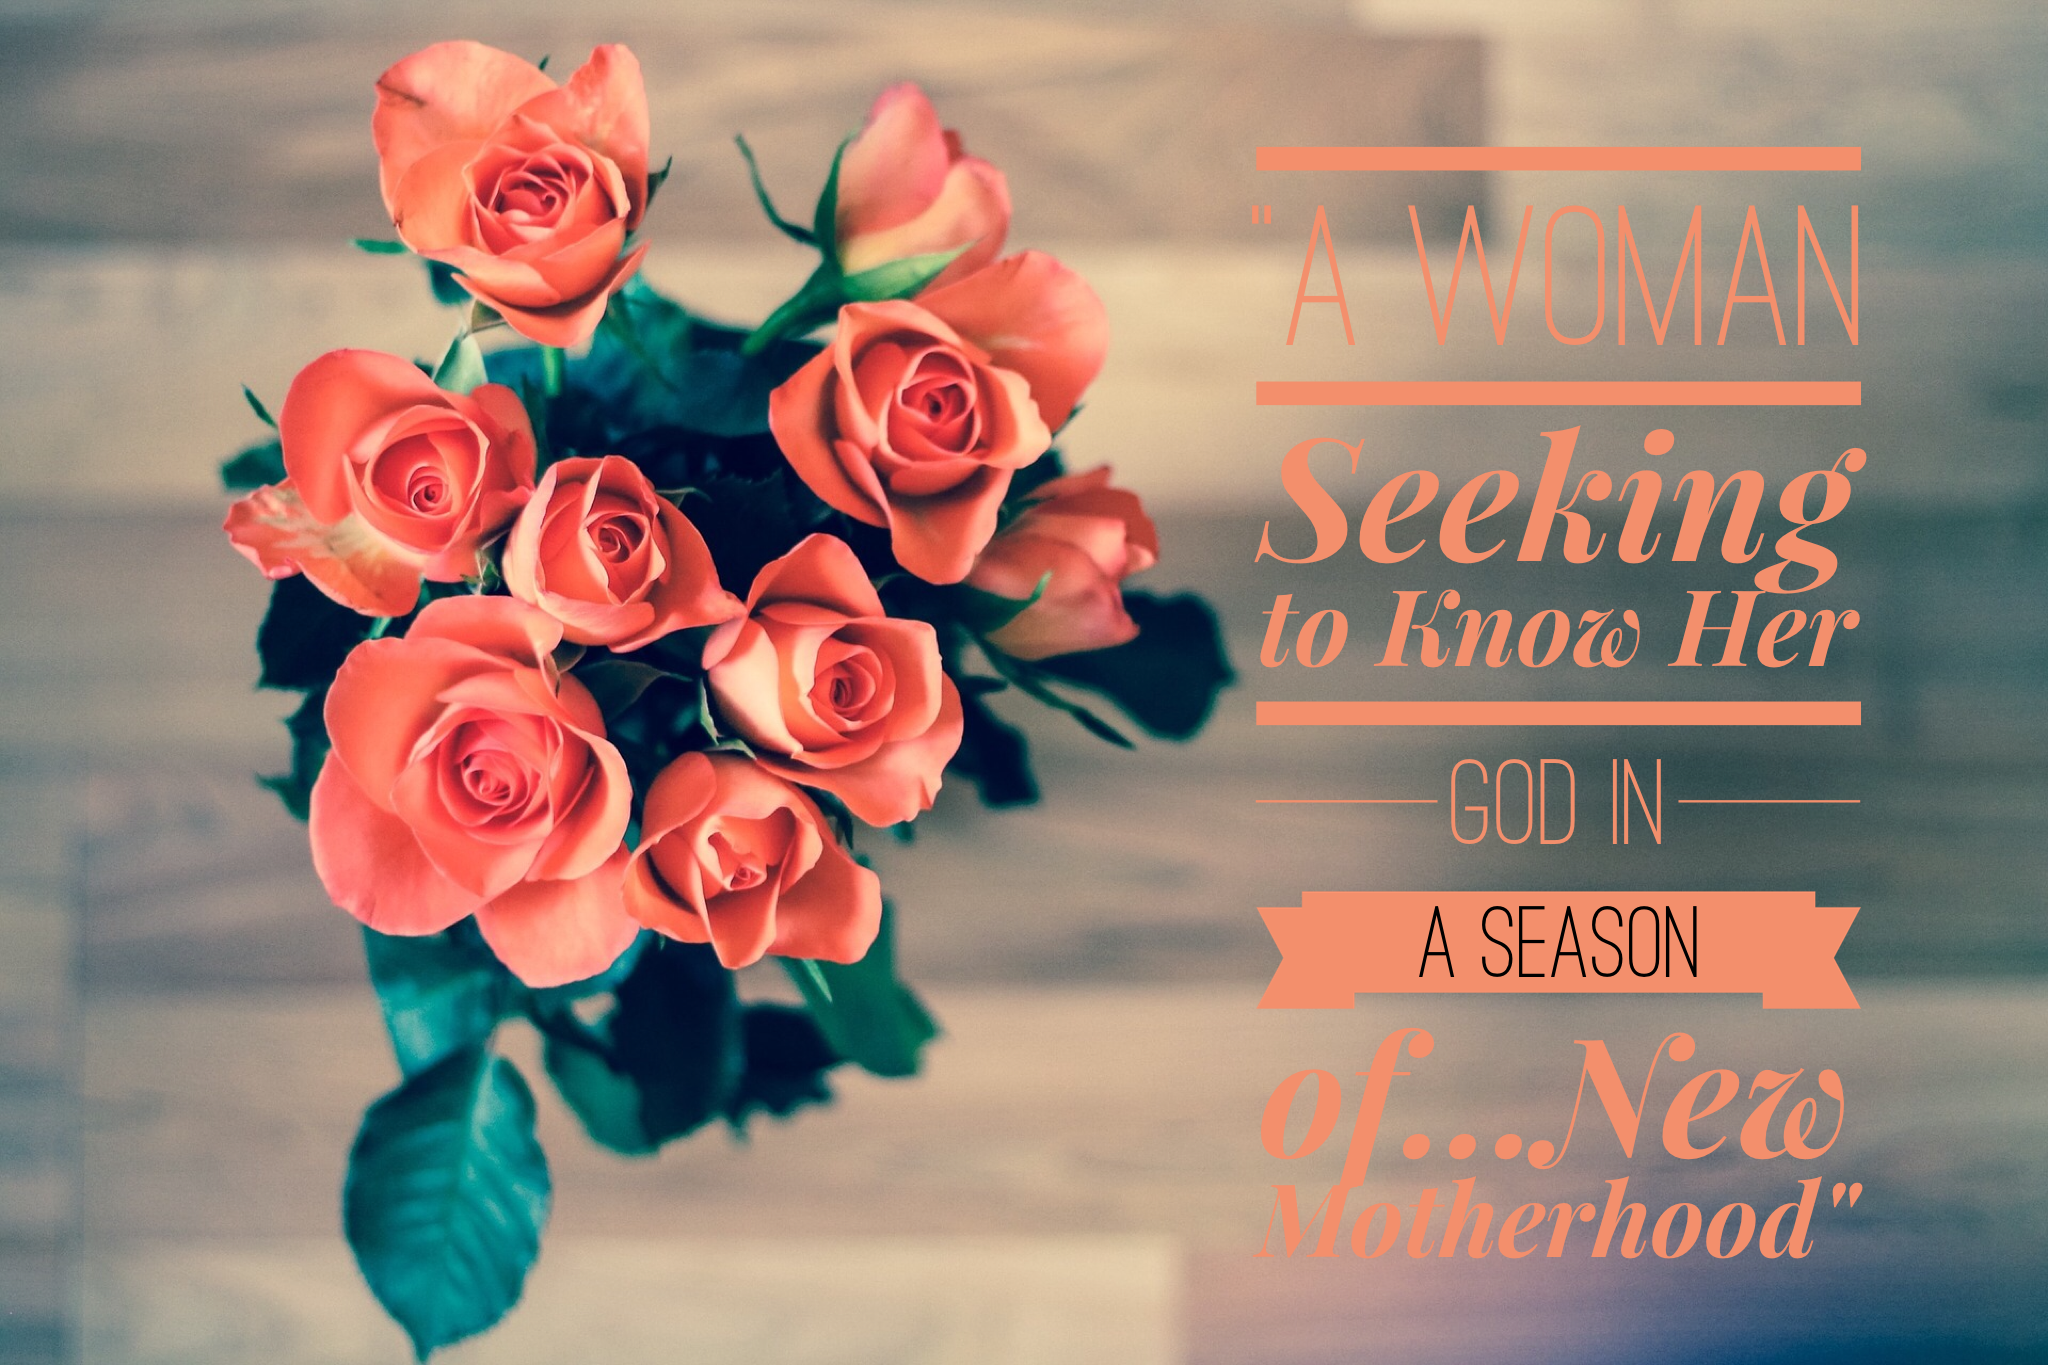 A Woman Seeking to Know Her God in a Season of New Motherhood | www.codyandras.com/blog/2017/8/24/a-woman-seeking-to-know-her-god-in-a-season-of-new-motherhood